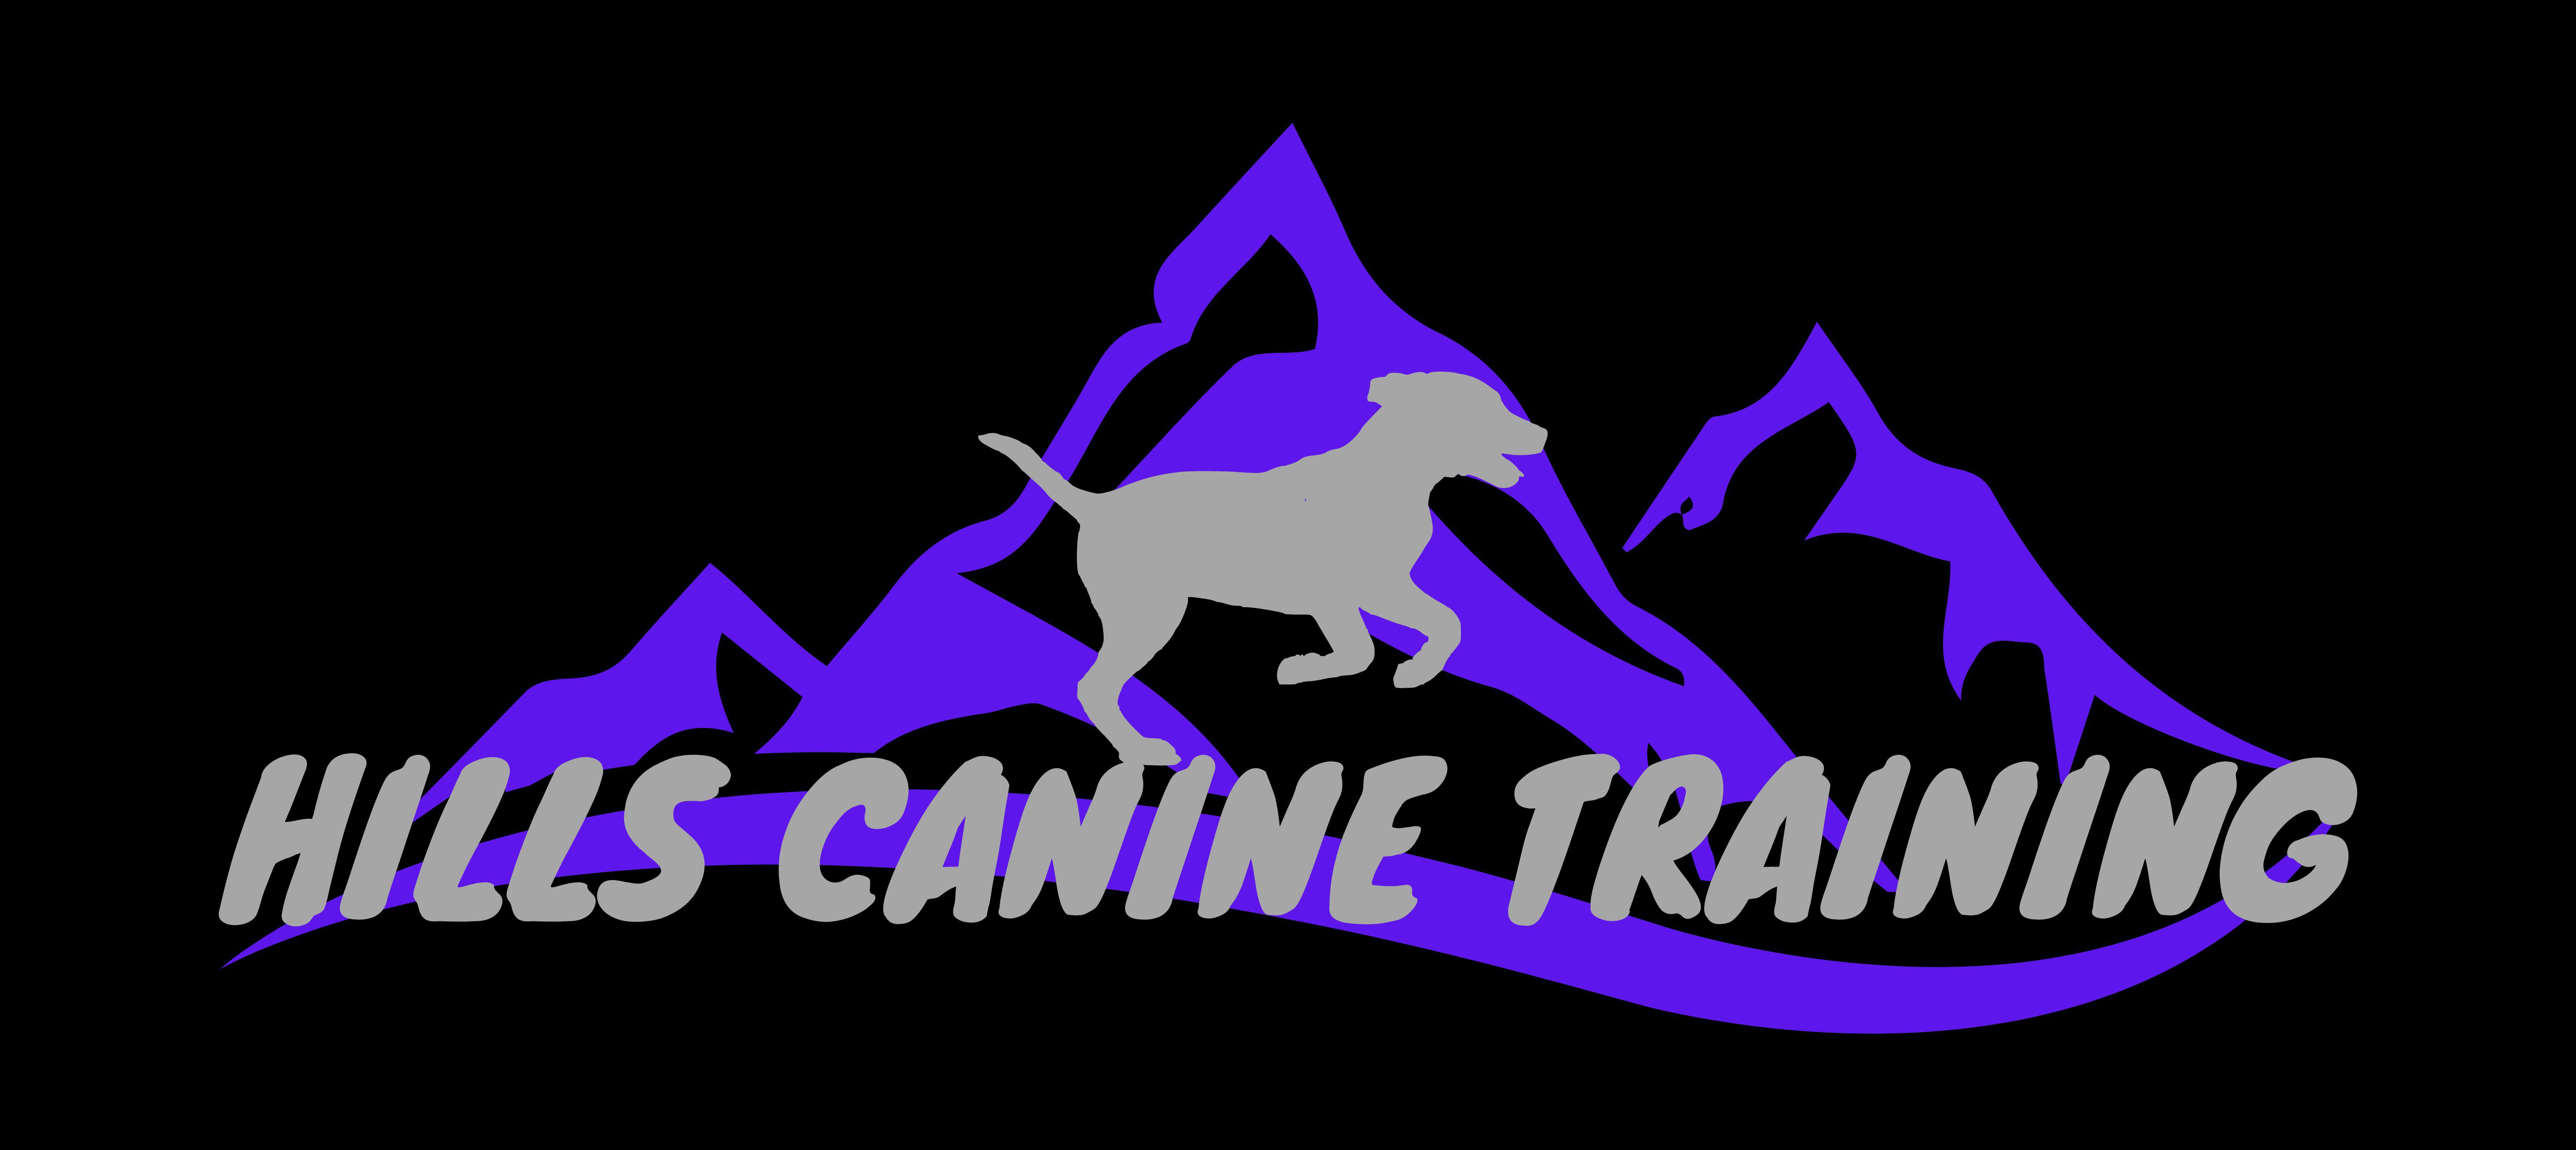 HILLS Canine Training Logo